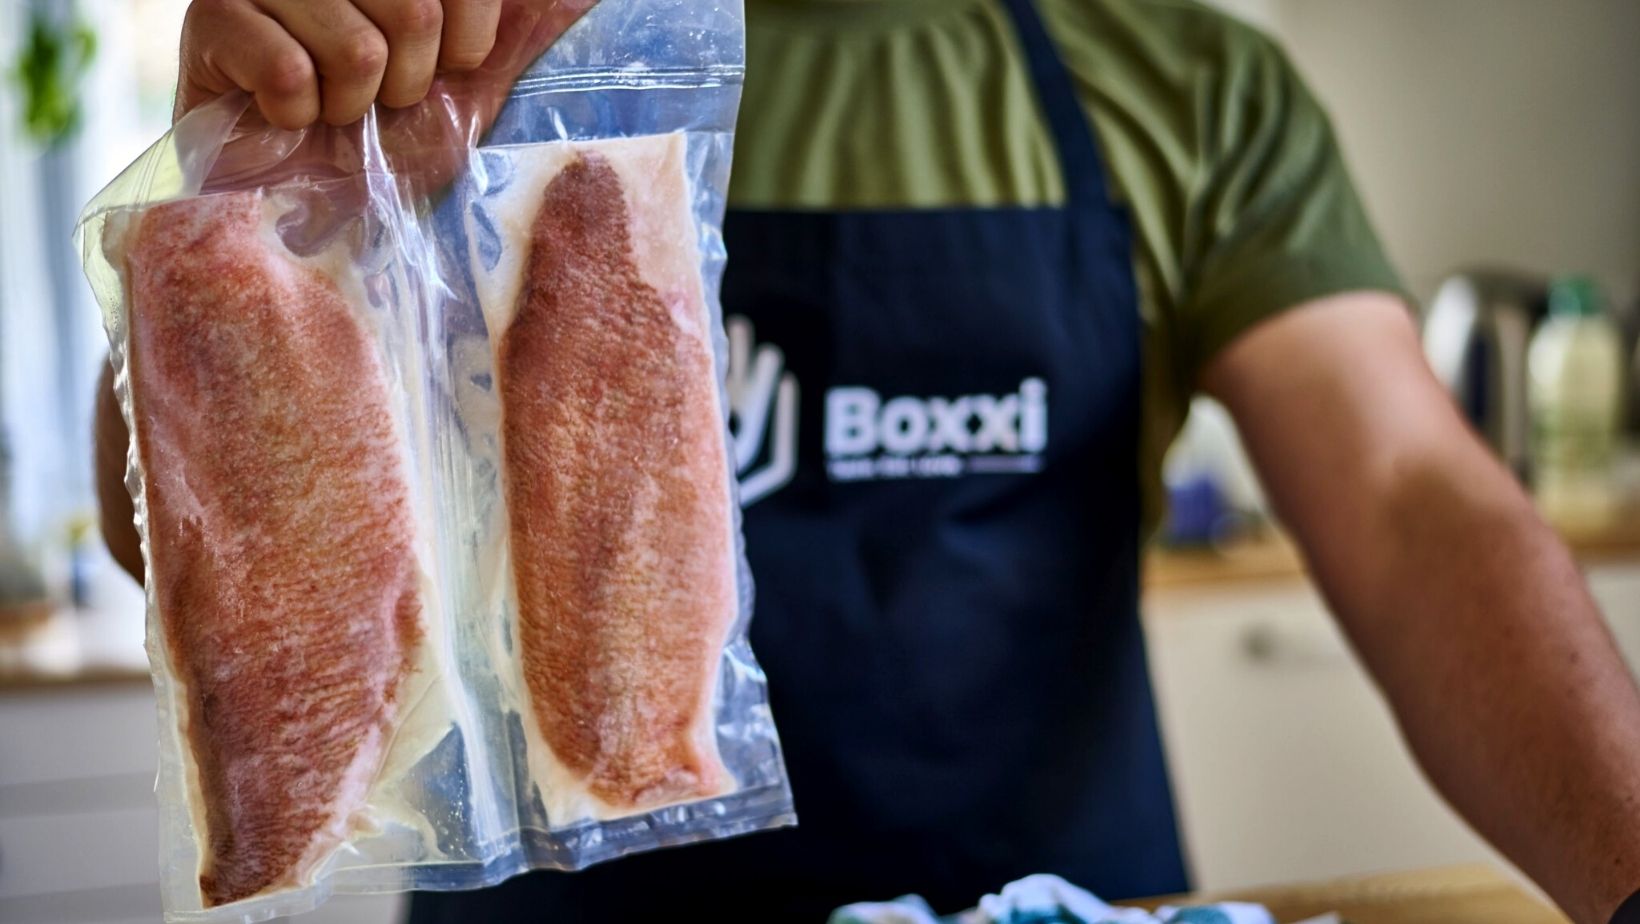 boxxi fish delivery